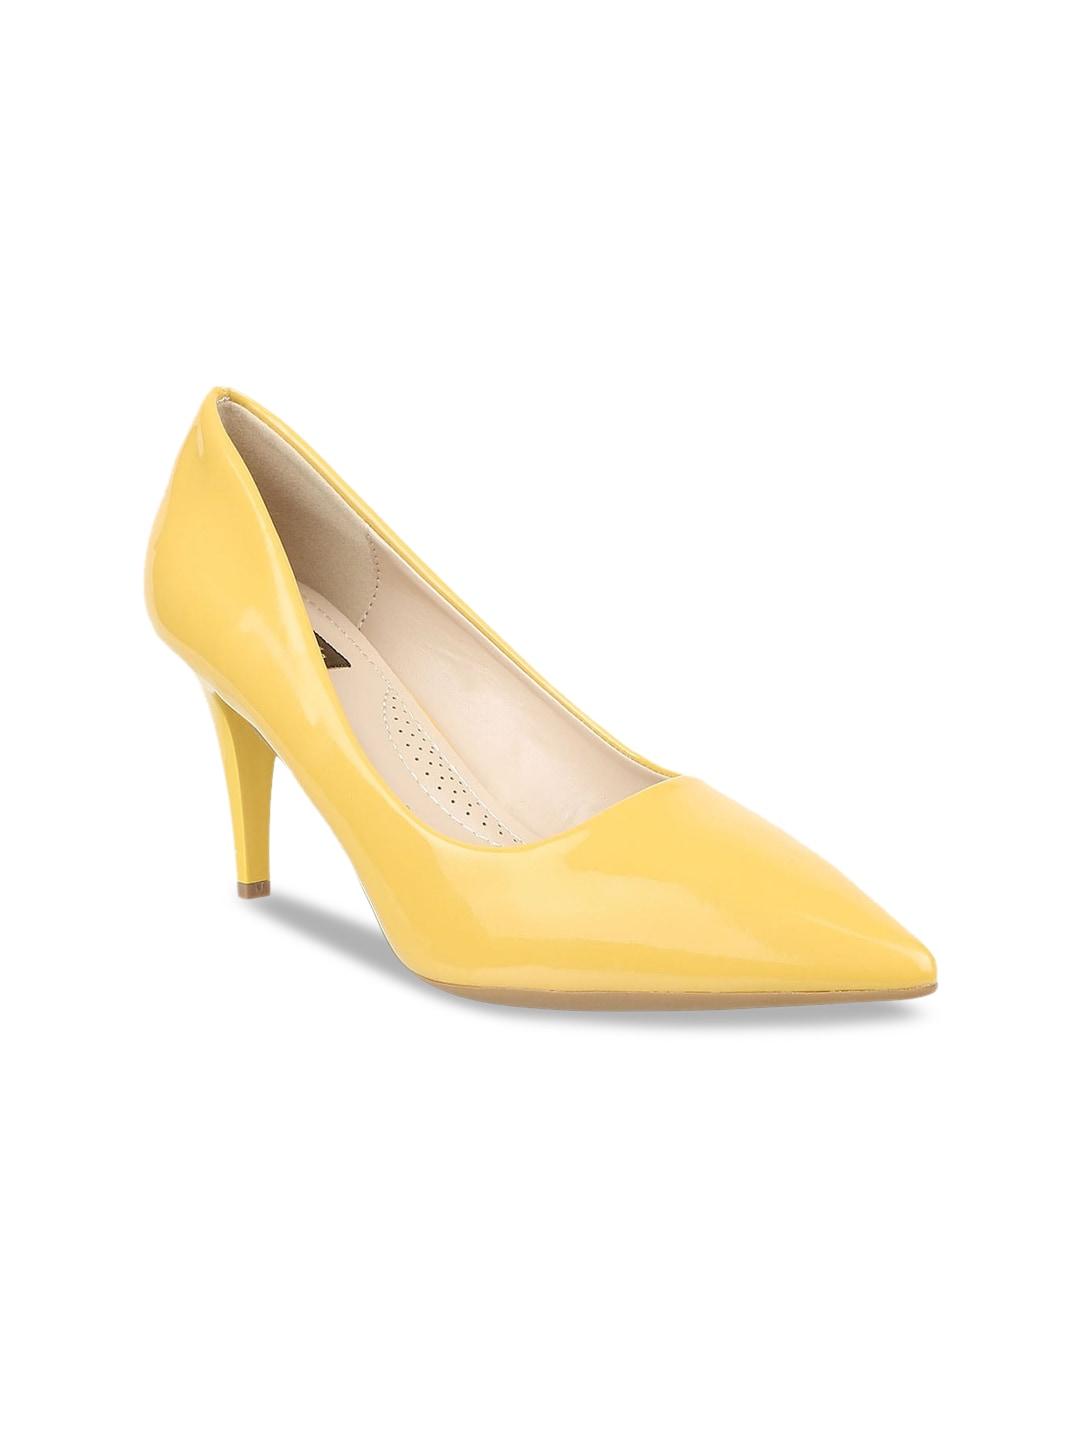 flat n heels women yellow solid pumps